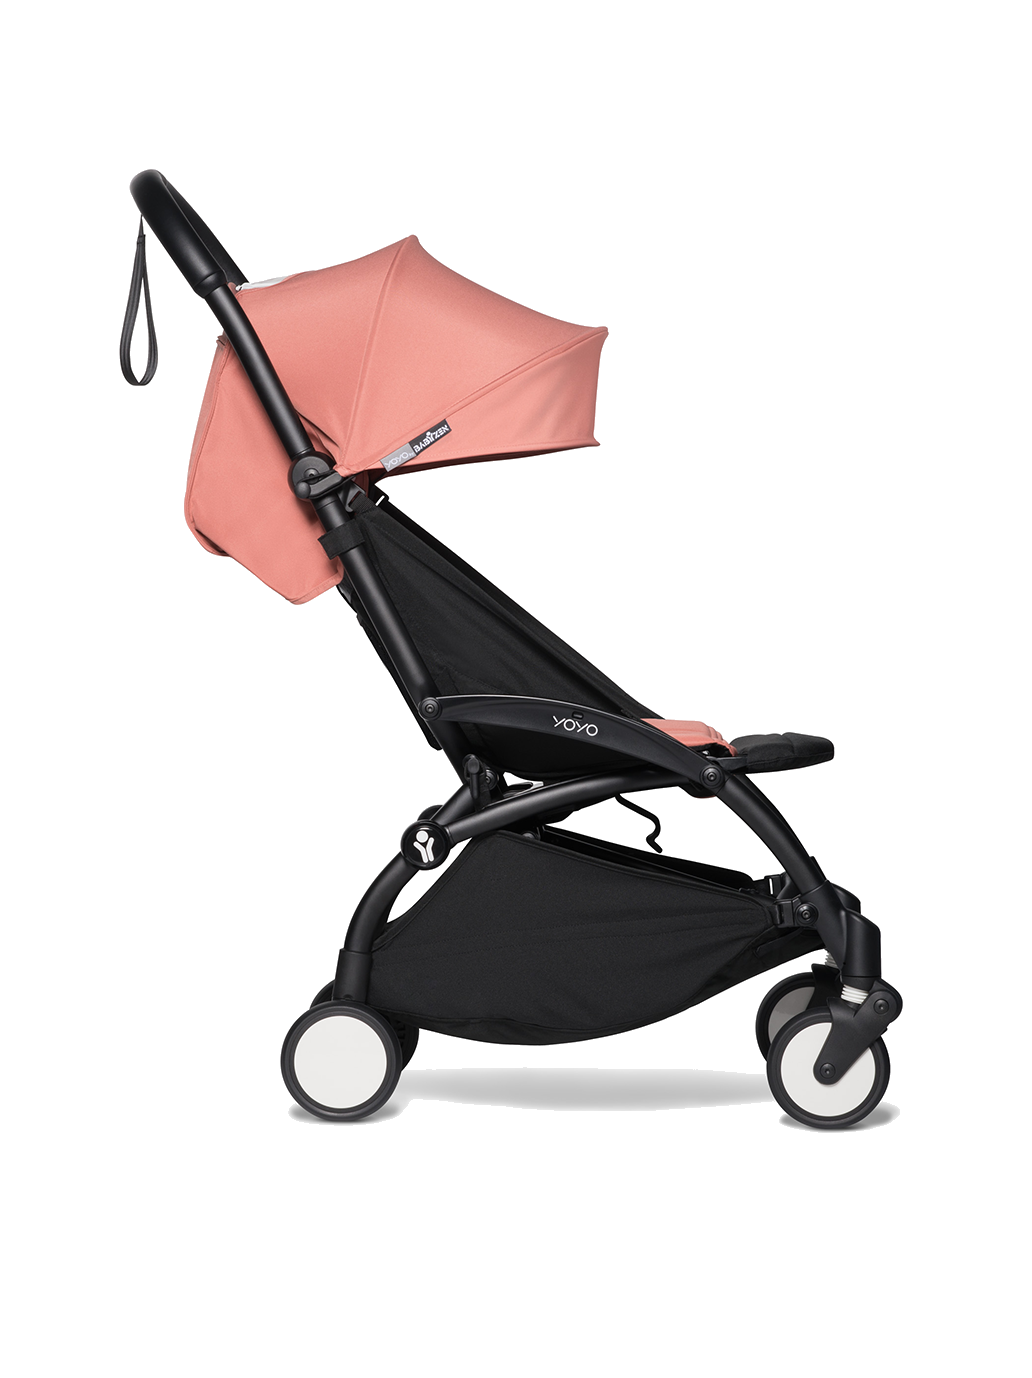 Footrest for the BABYZEN YOYO stroller